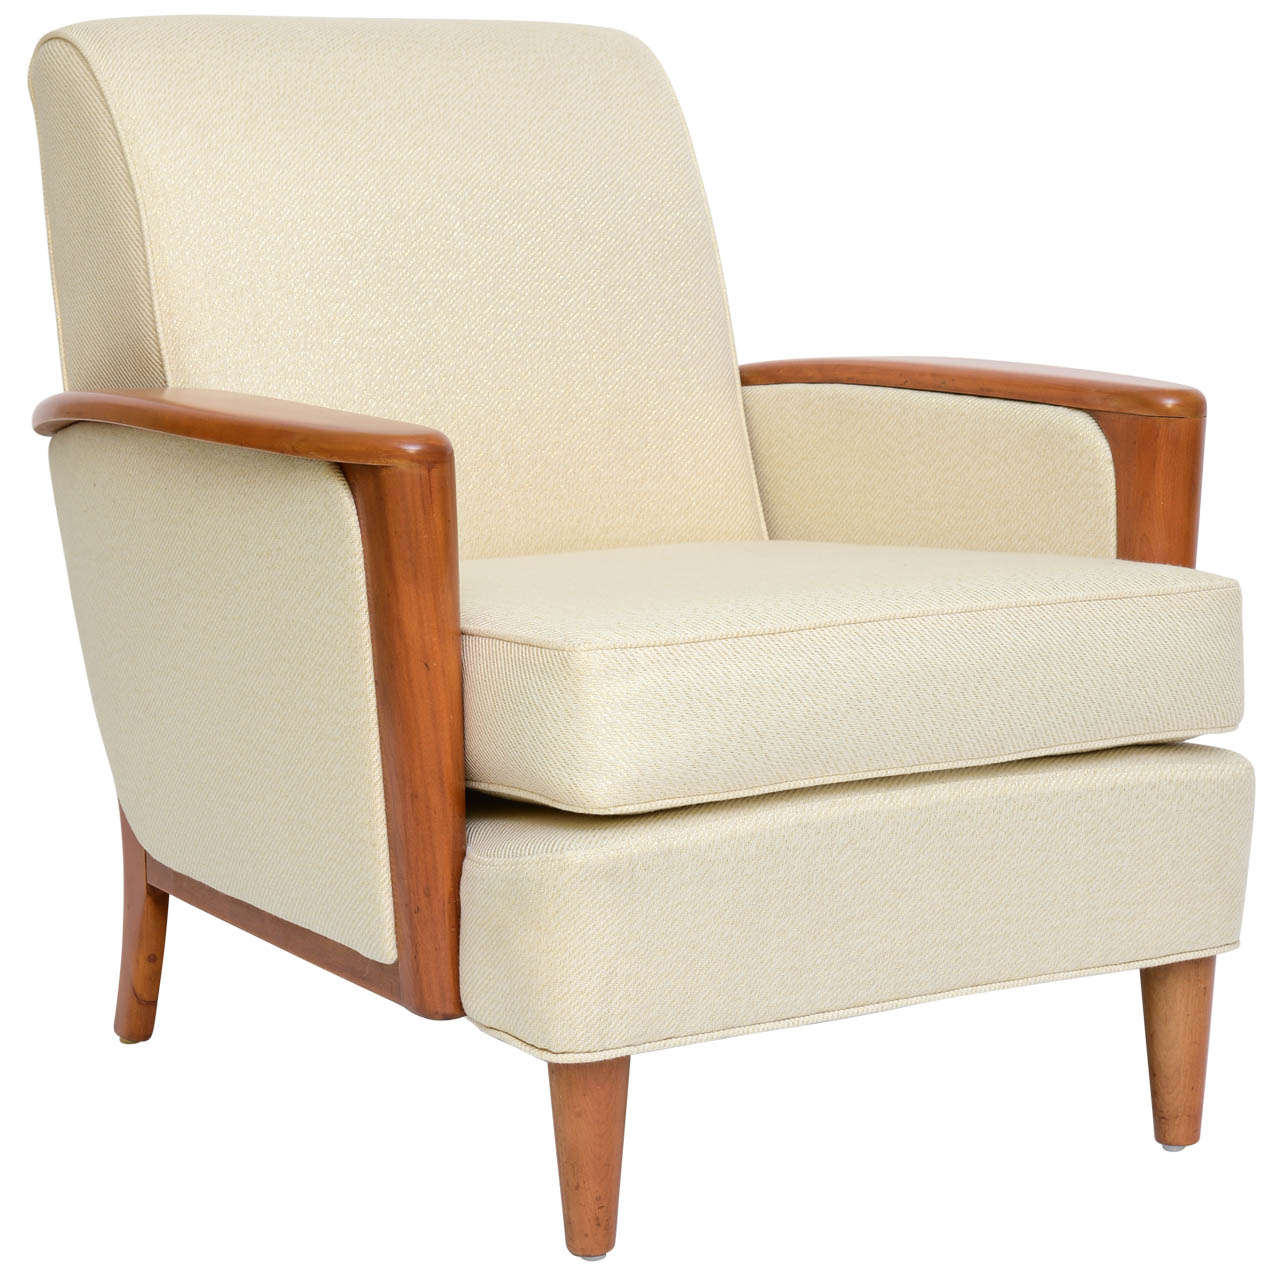 1941 Streamline Modern Lounge Chair by Heywood Wakefield